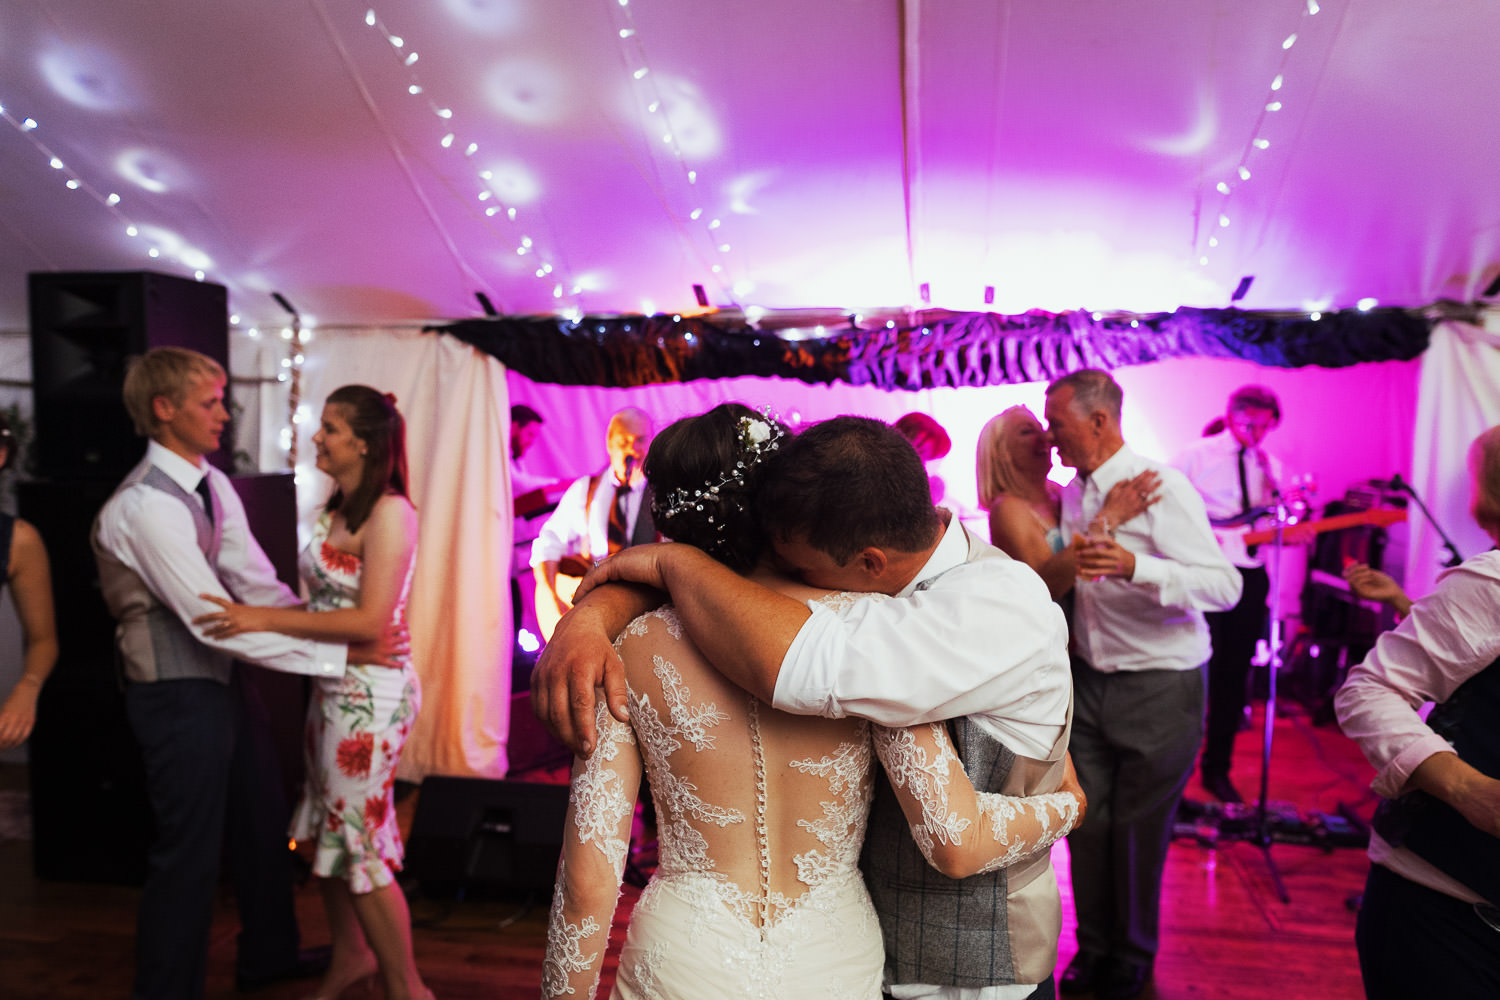 Man hugging his wife at wedding reception.